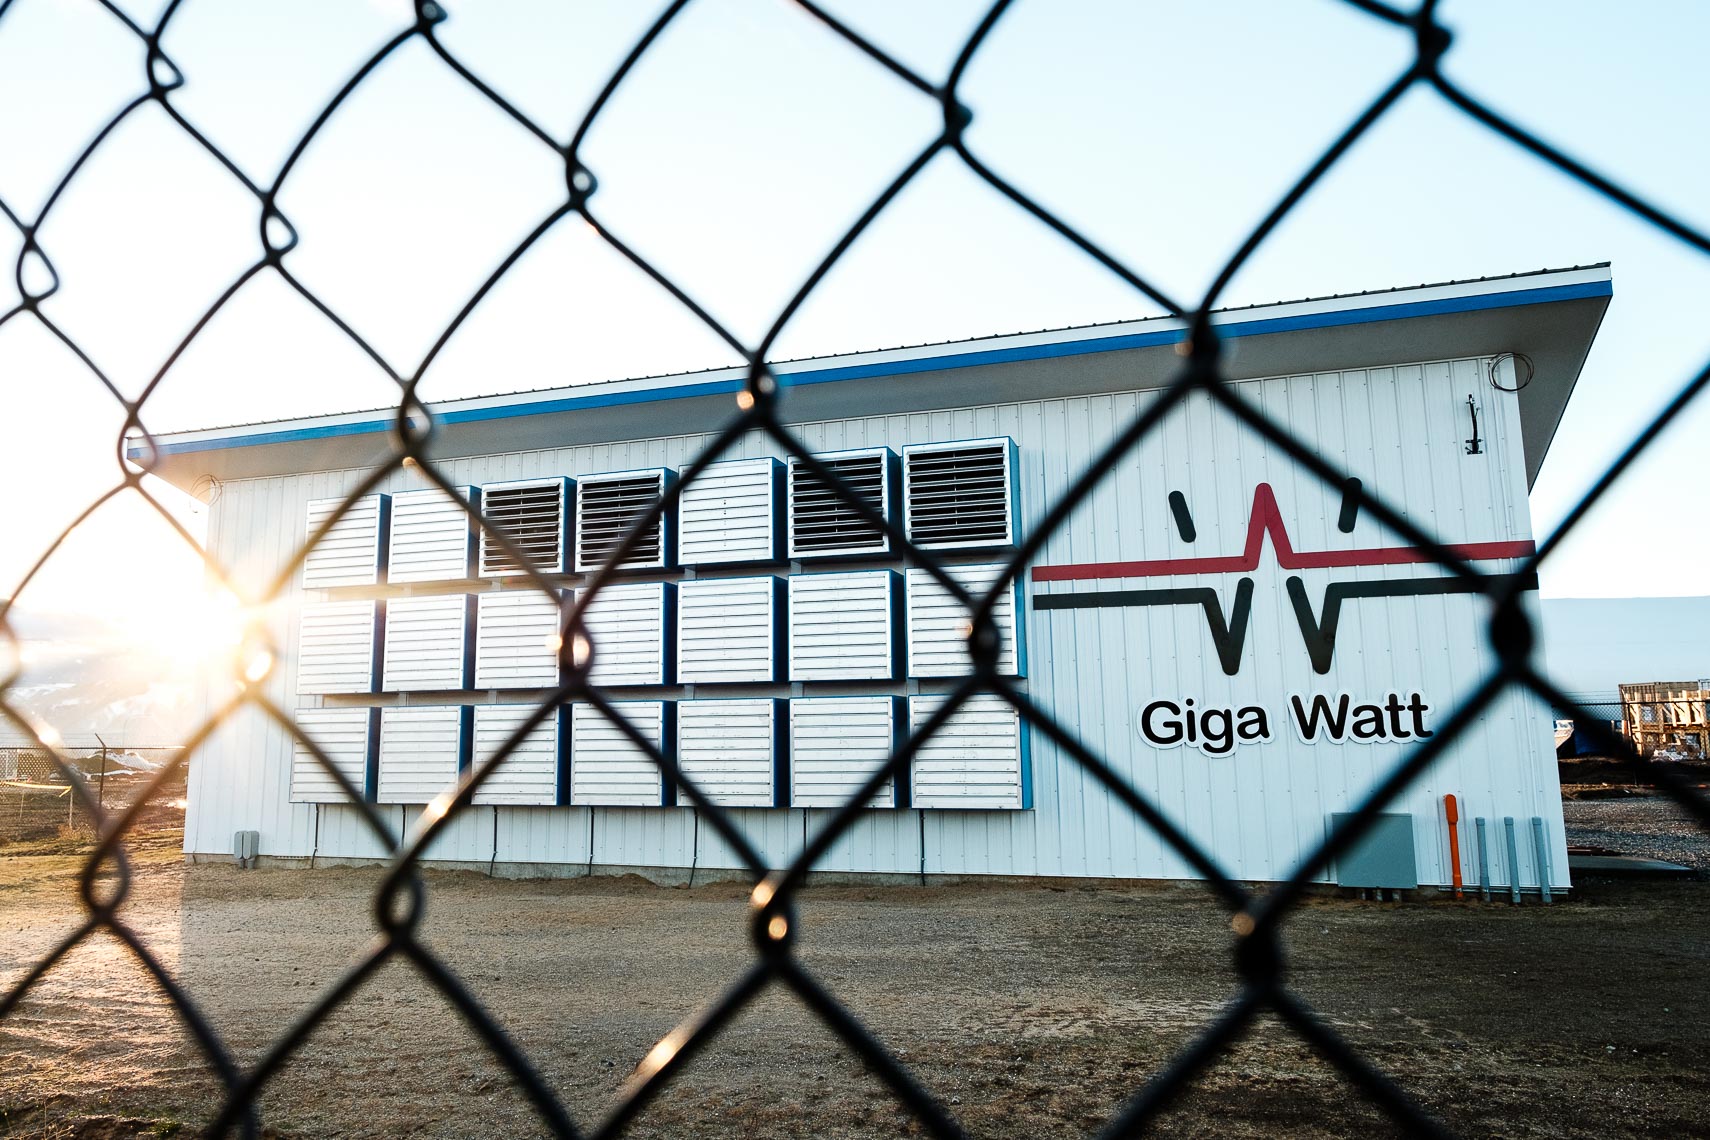 giga watt gigapod bitcoin mining center run by dave carlson in the columbia river valley in central washington